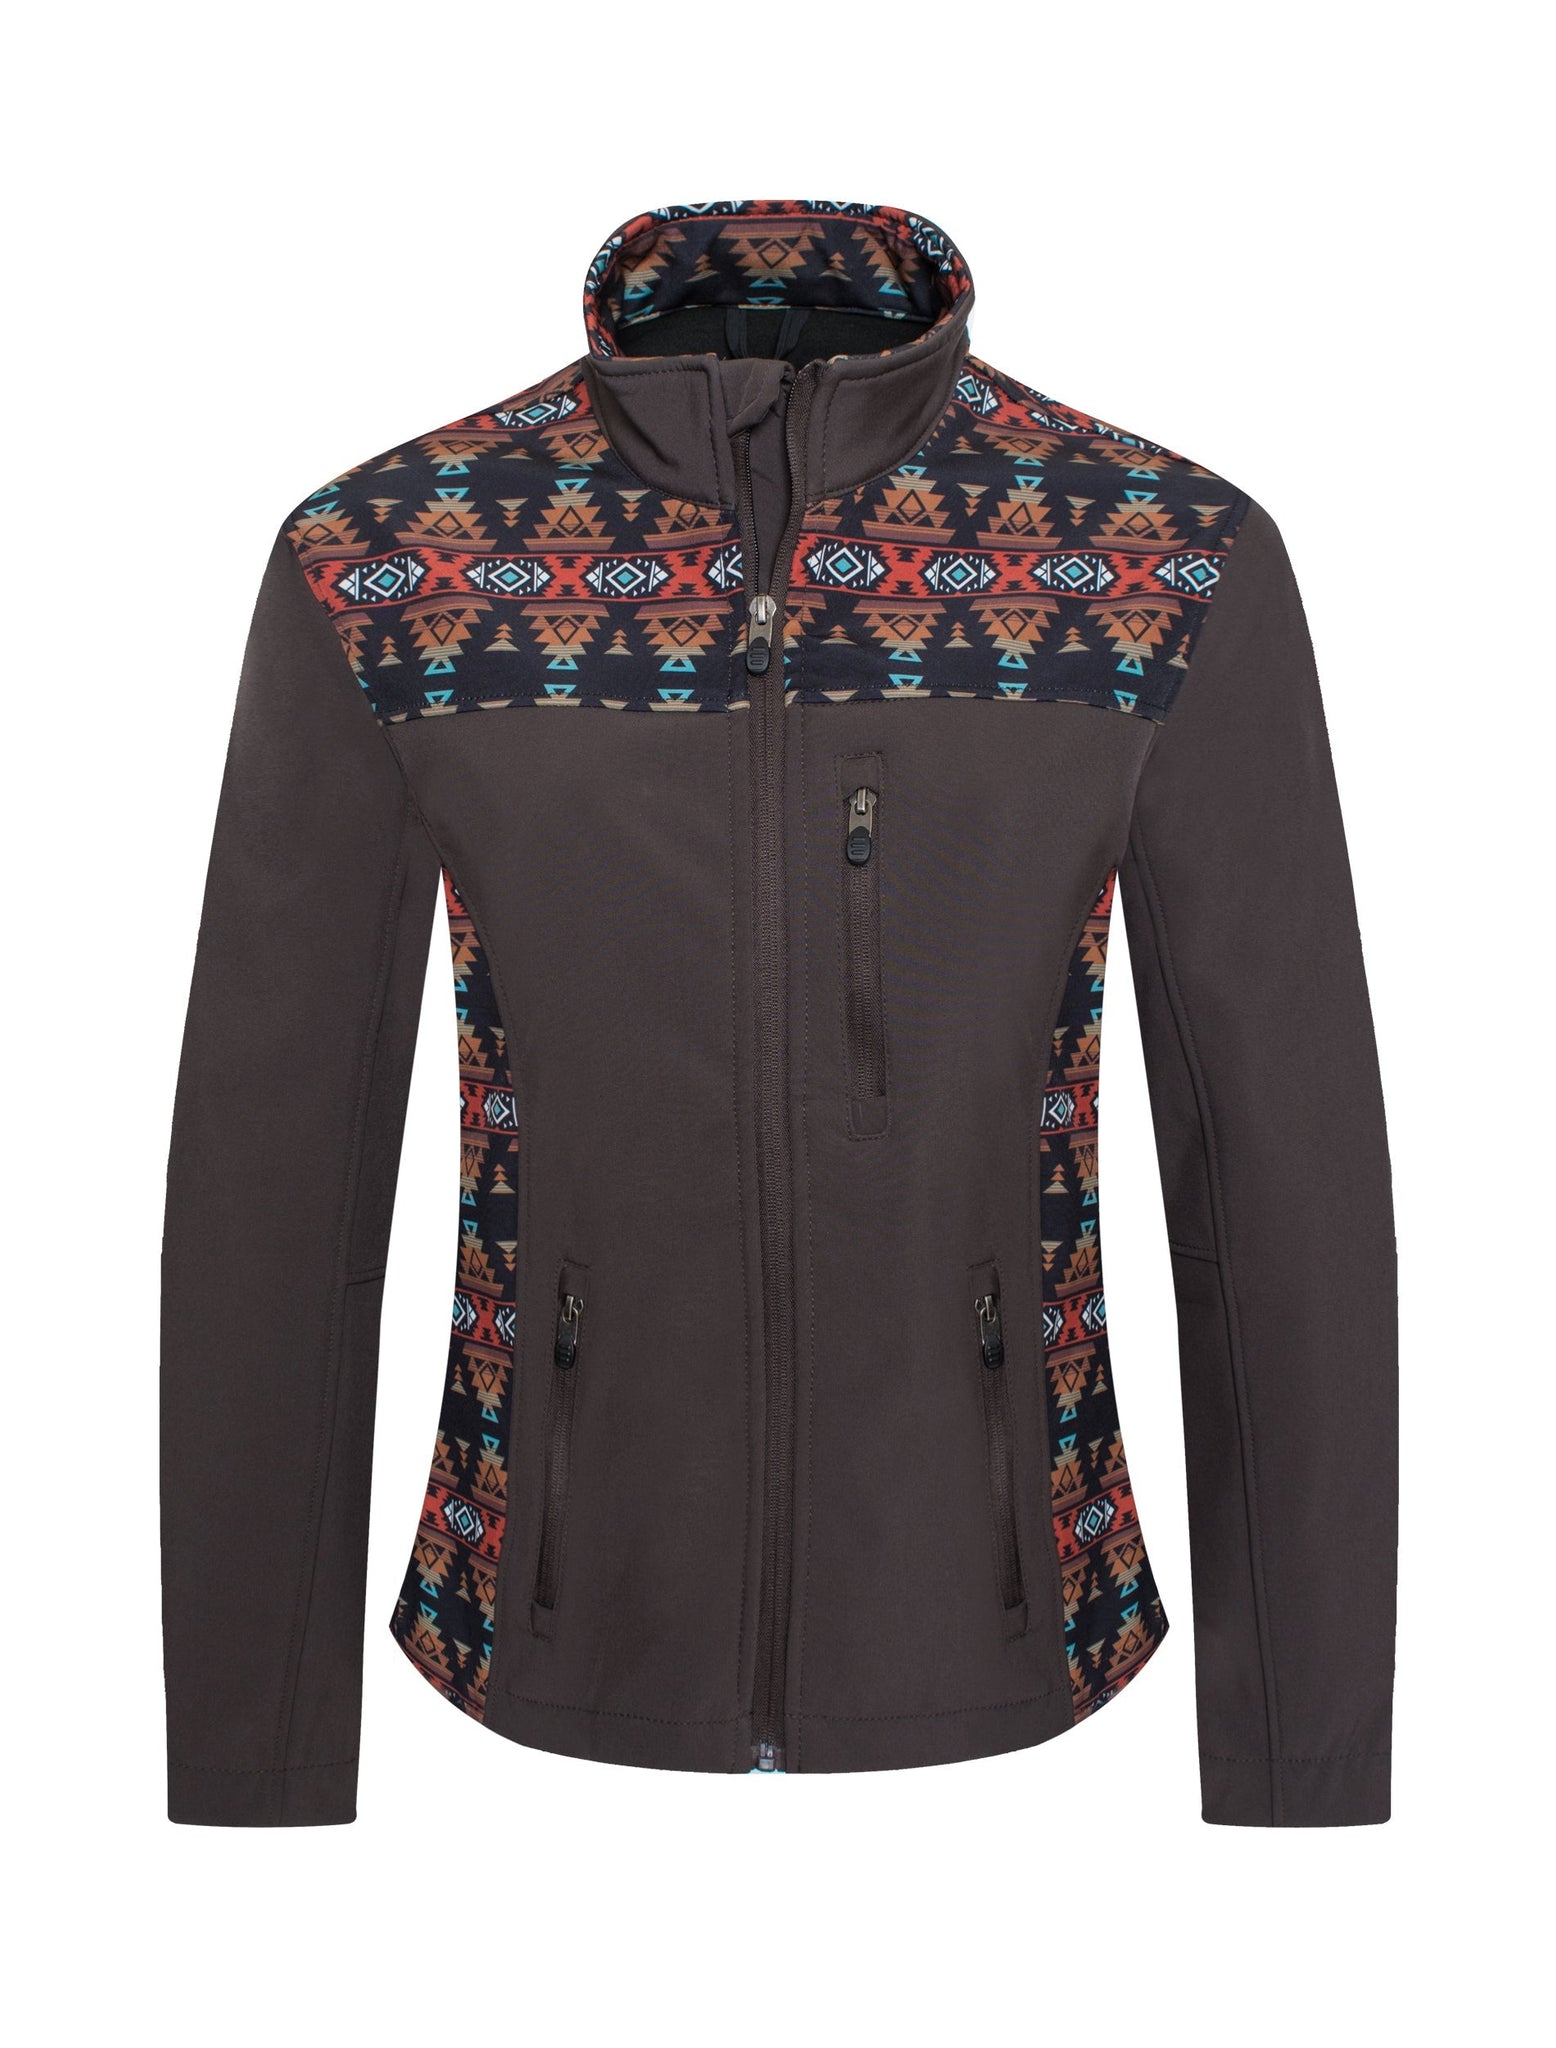 Women's Western Aztec Print Jacket -LJ650EMB-AZ-BROWN-RUST